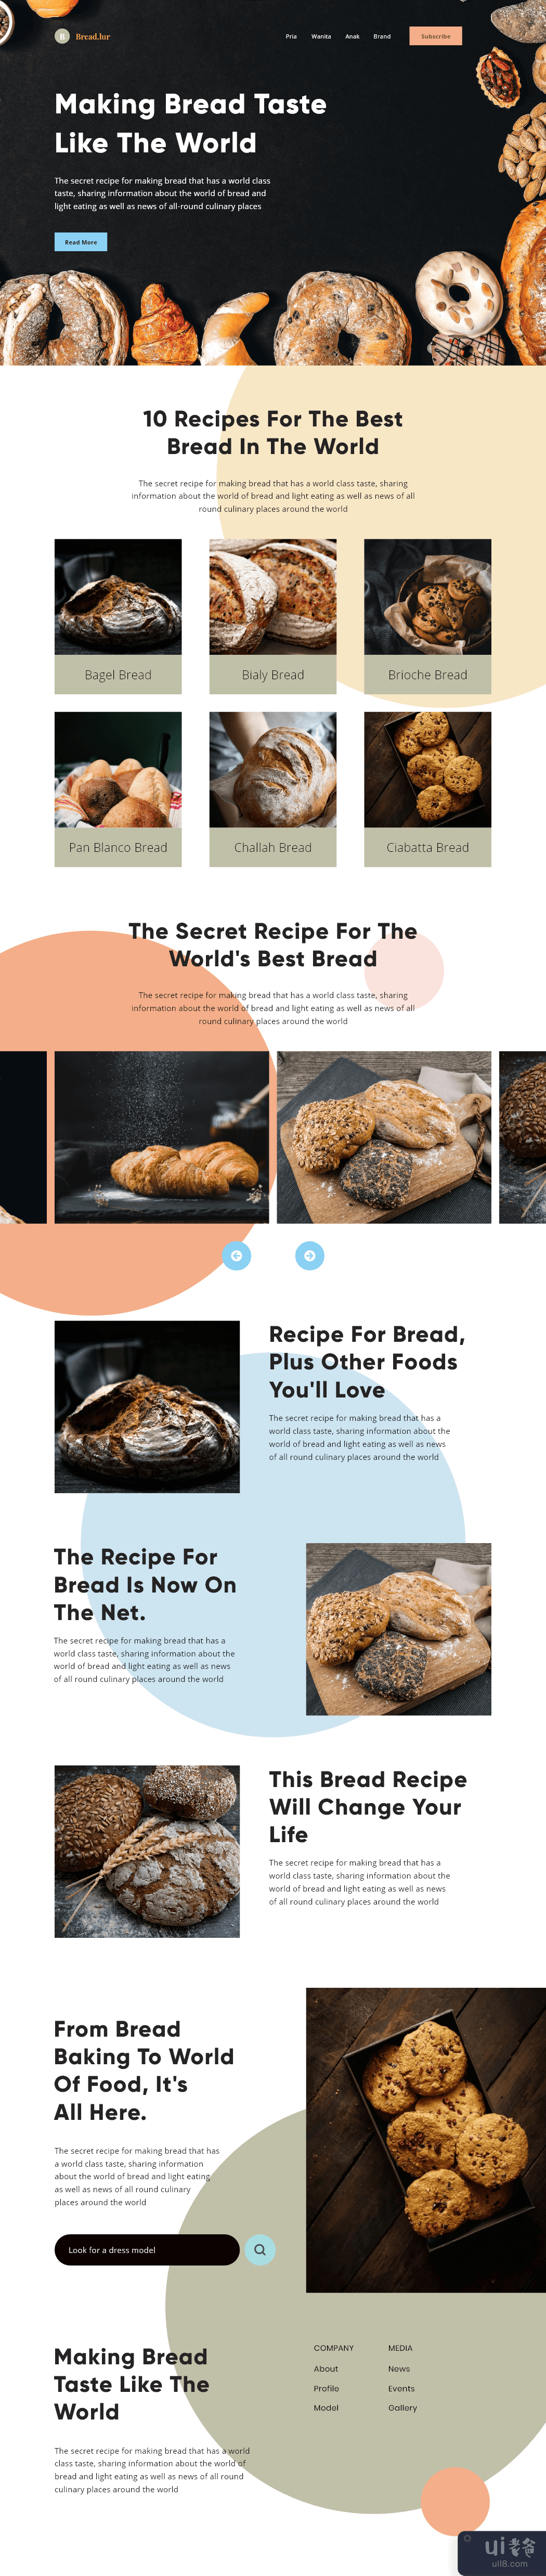 Bread.lur - 面包烹饪登陆页面(Bread.lur - Bread Culinary Landing Page)插图